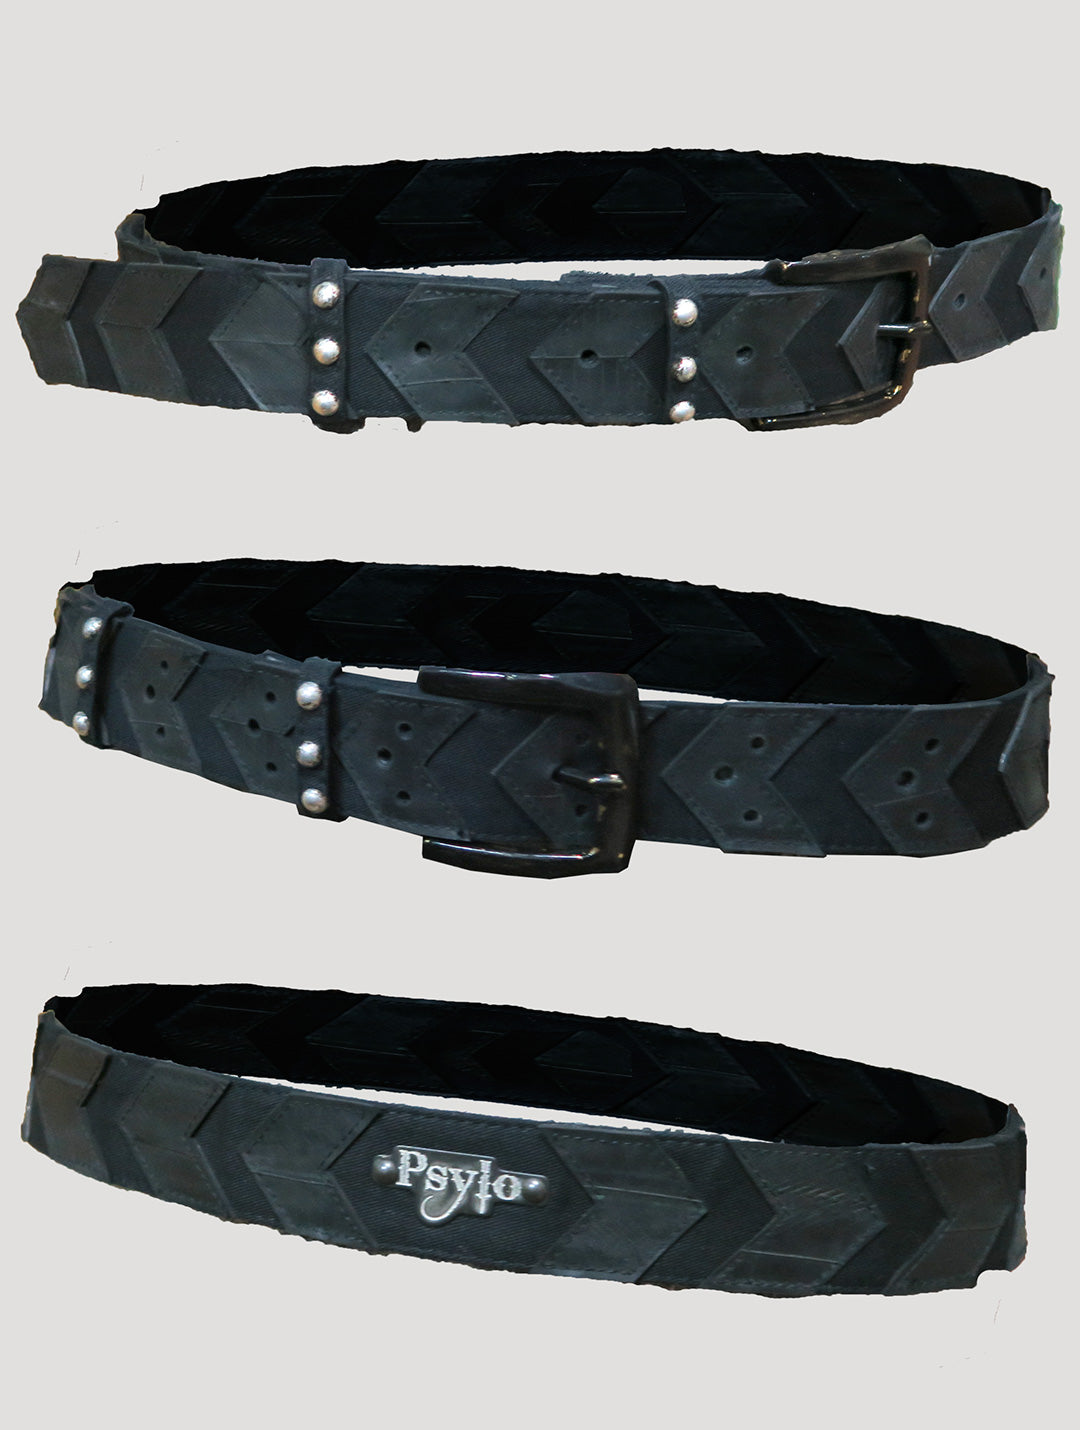 Speed belt - Psylo Fashion